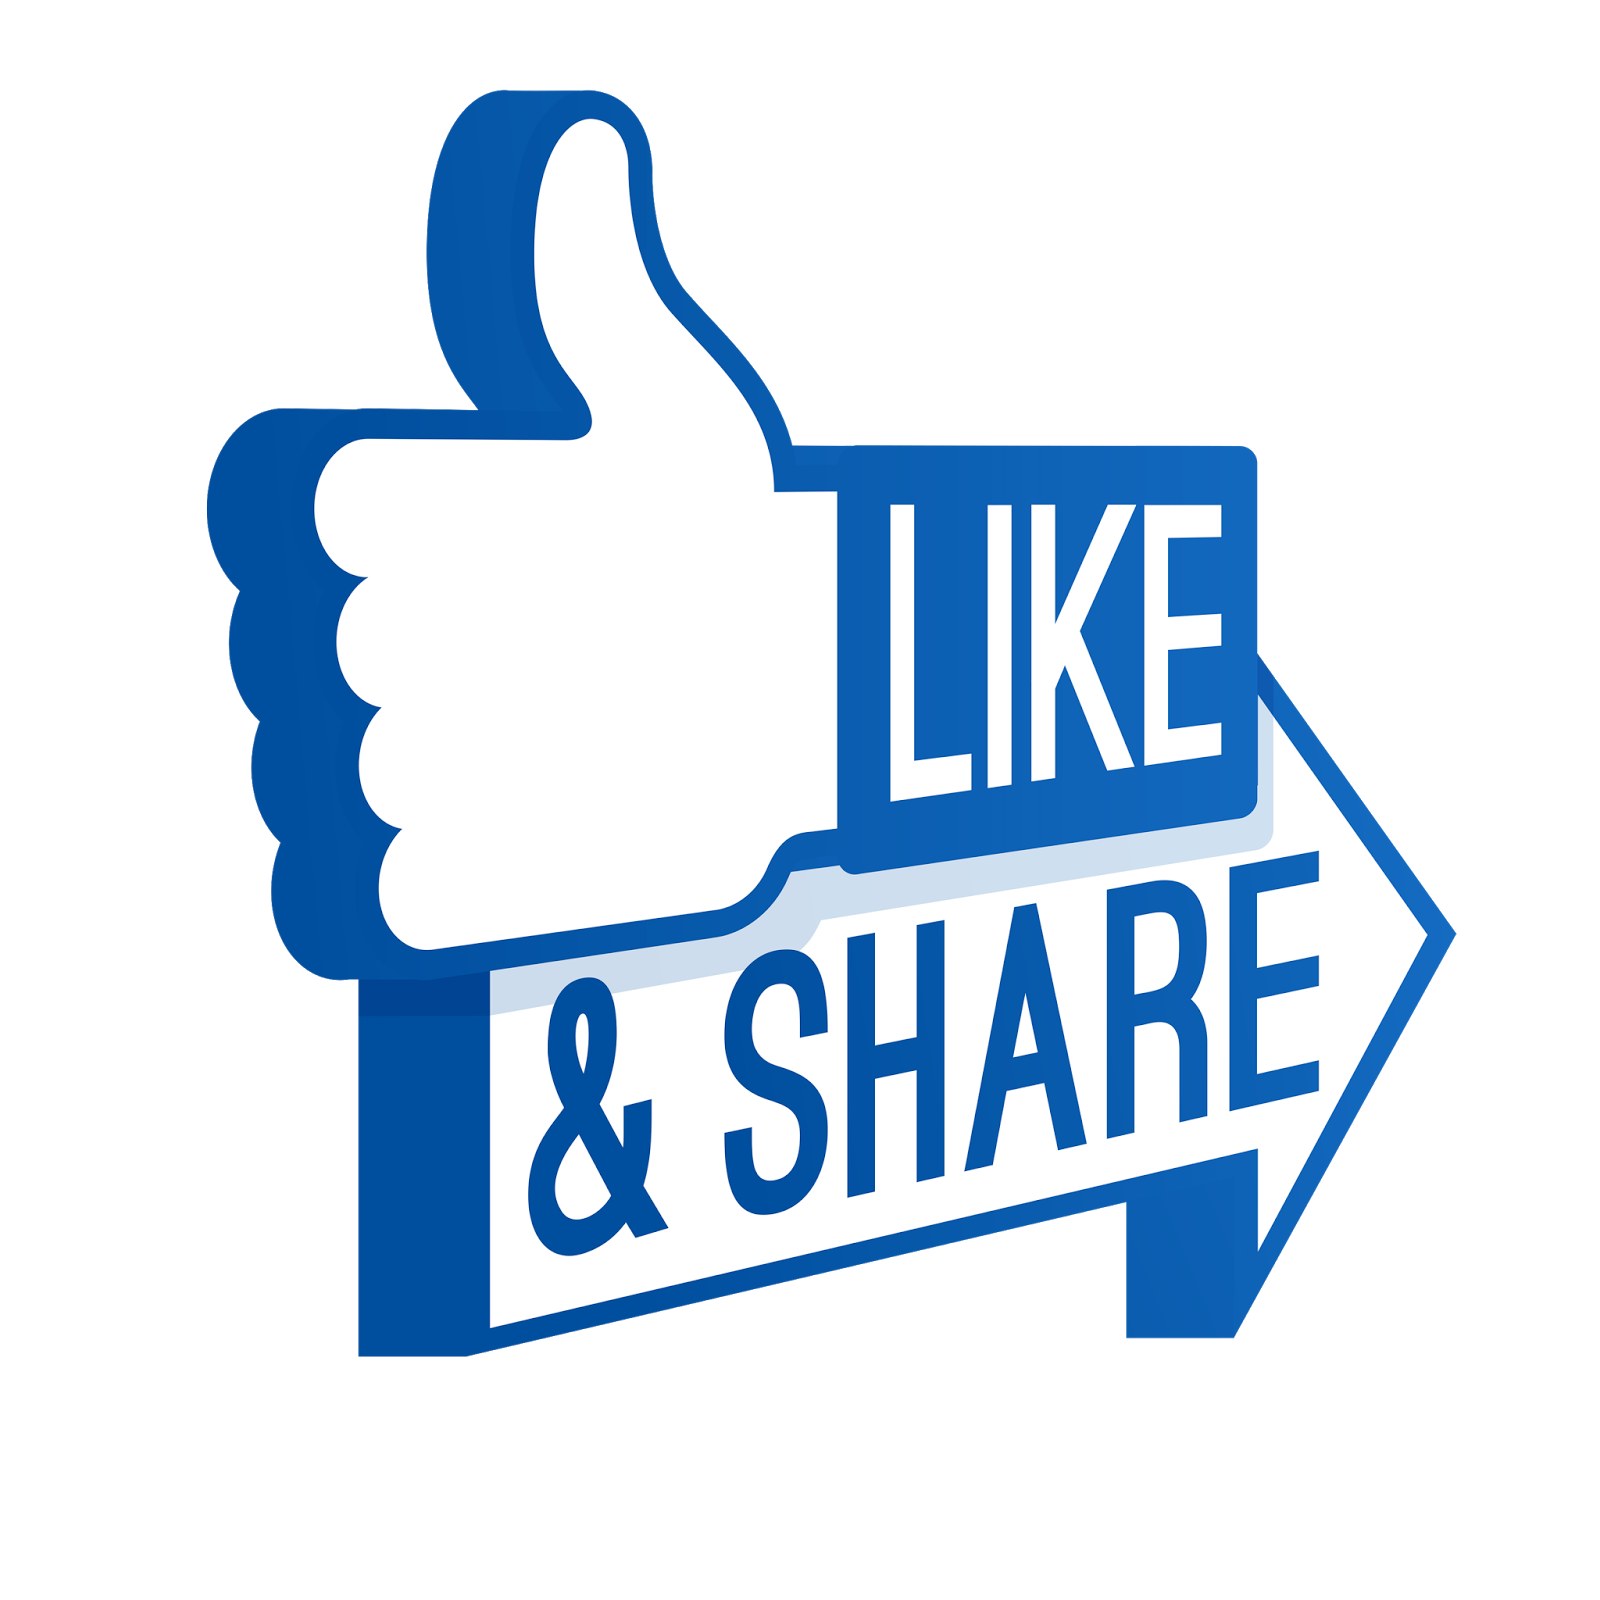 Facebook Logo Png Free Download Logo Facebook Clipart Free Transparent Png Logos